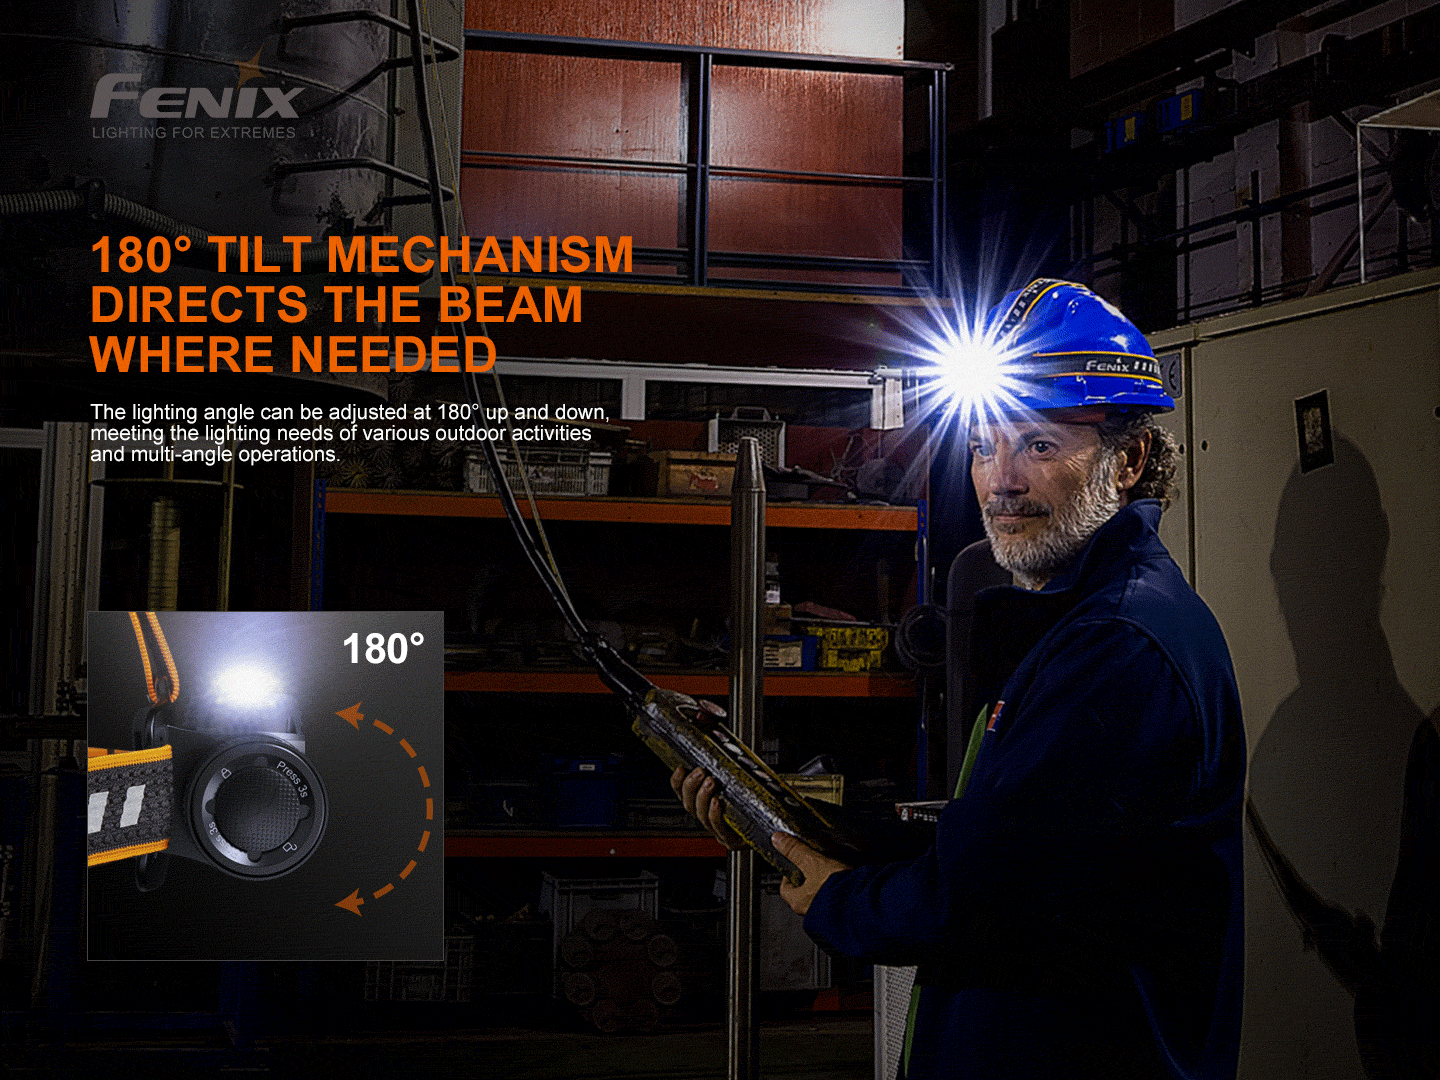 Fenix HM70R Rechargeable Headlamp 1600 Lumens